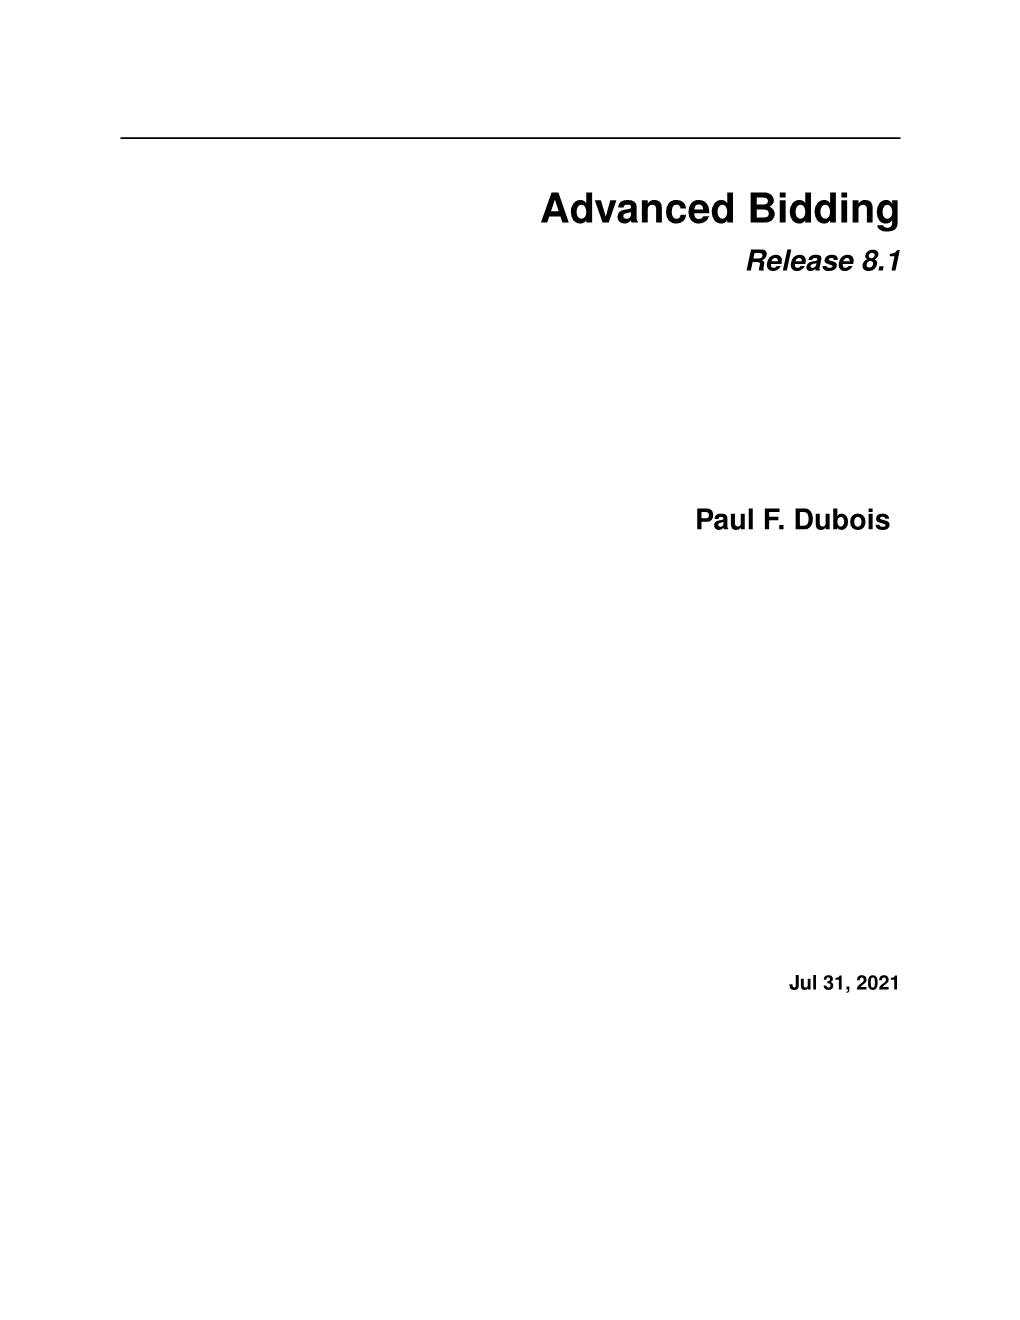 Advanced Bidding Release 8.1